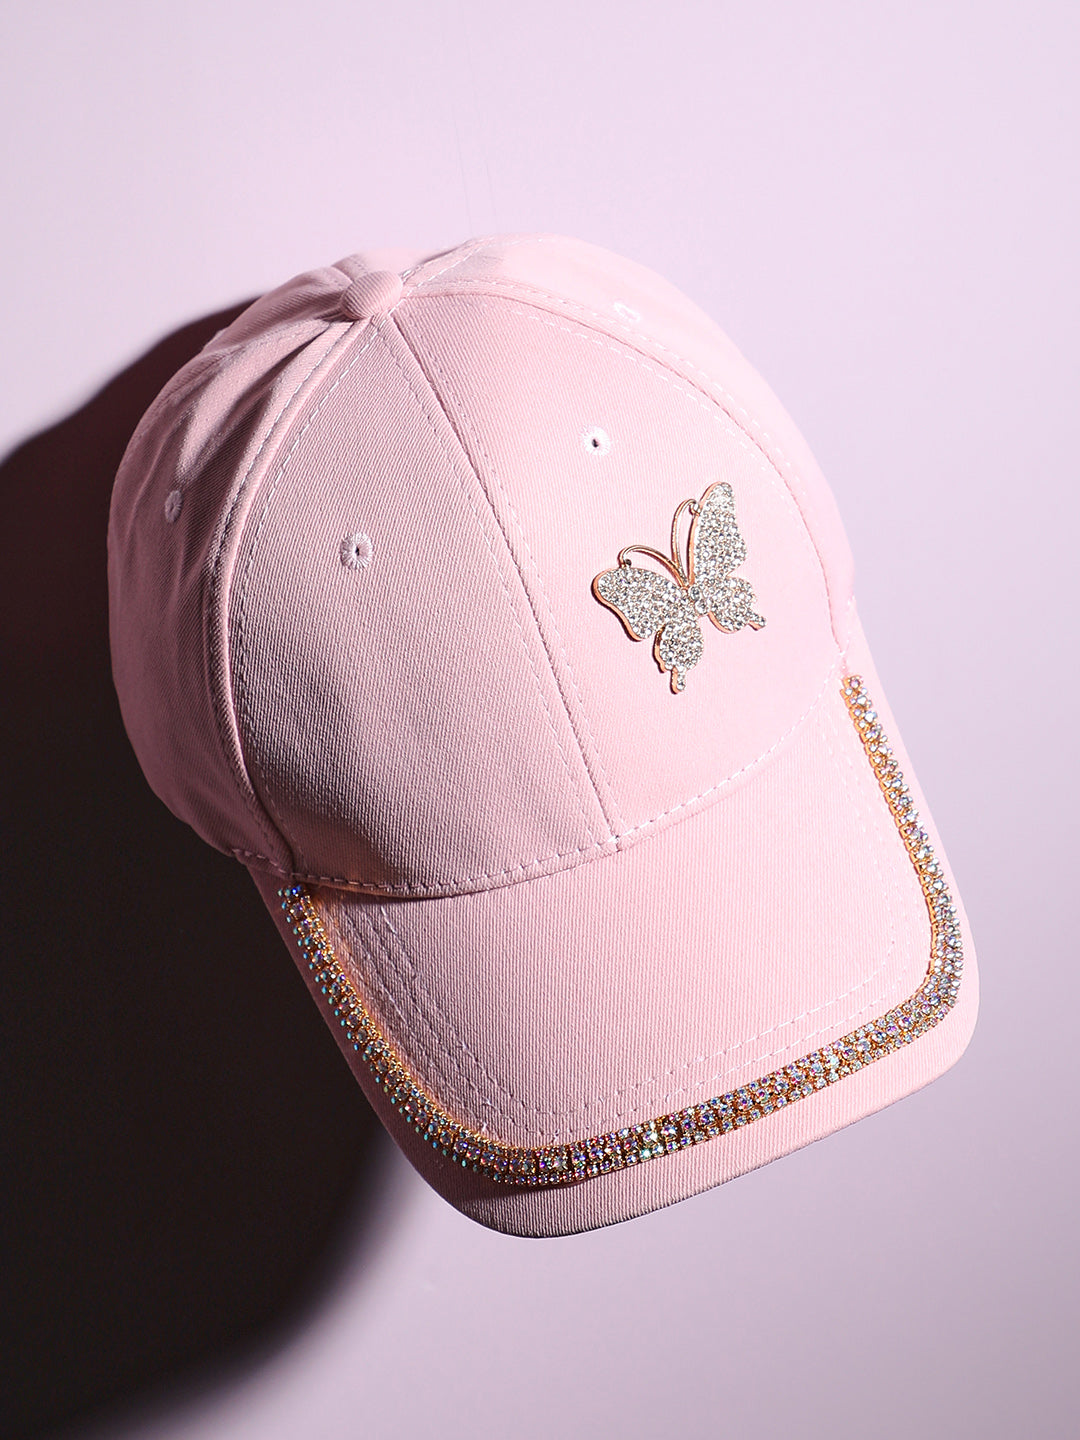 Rhinestone Butterfly Baseball Cap - Baby Pink